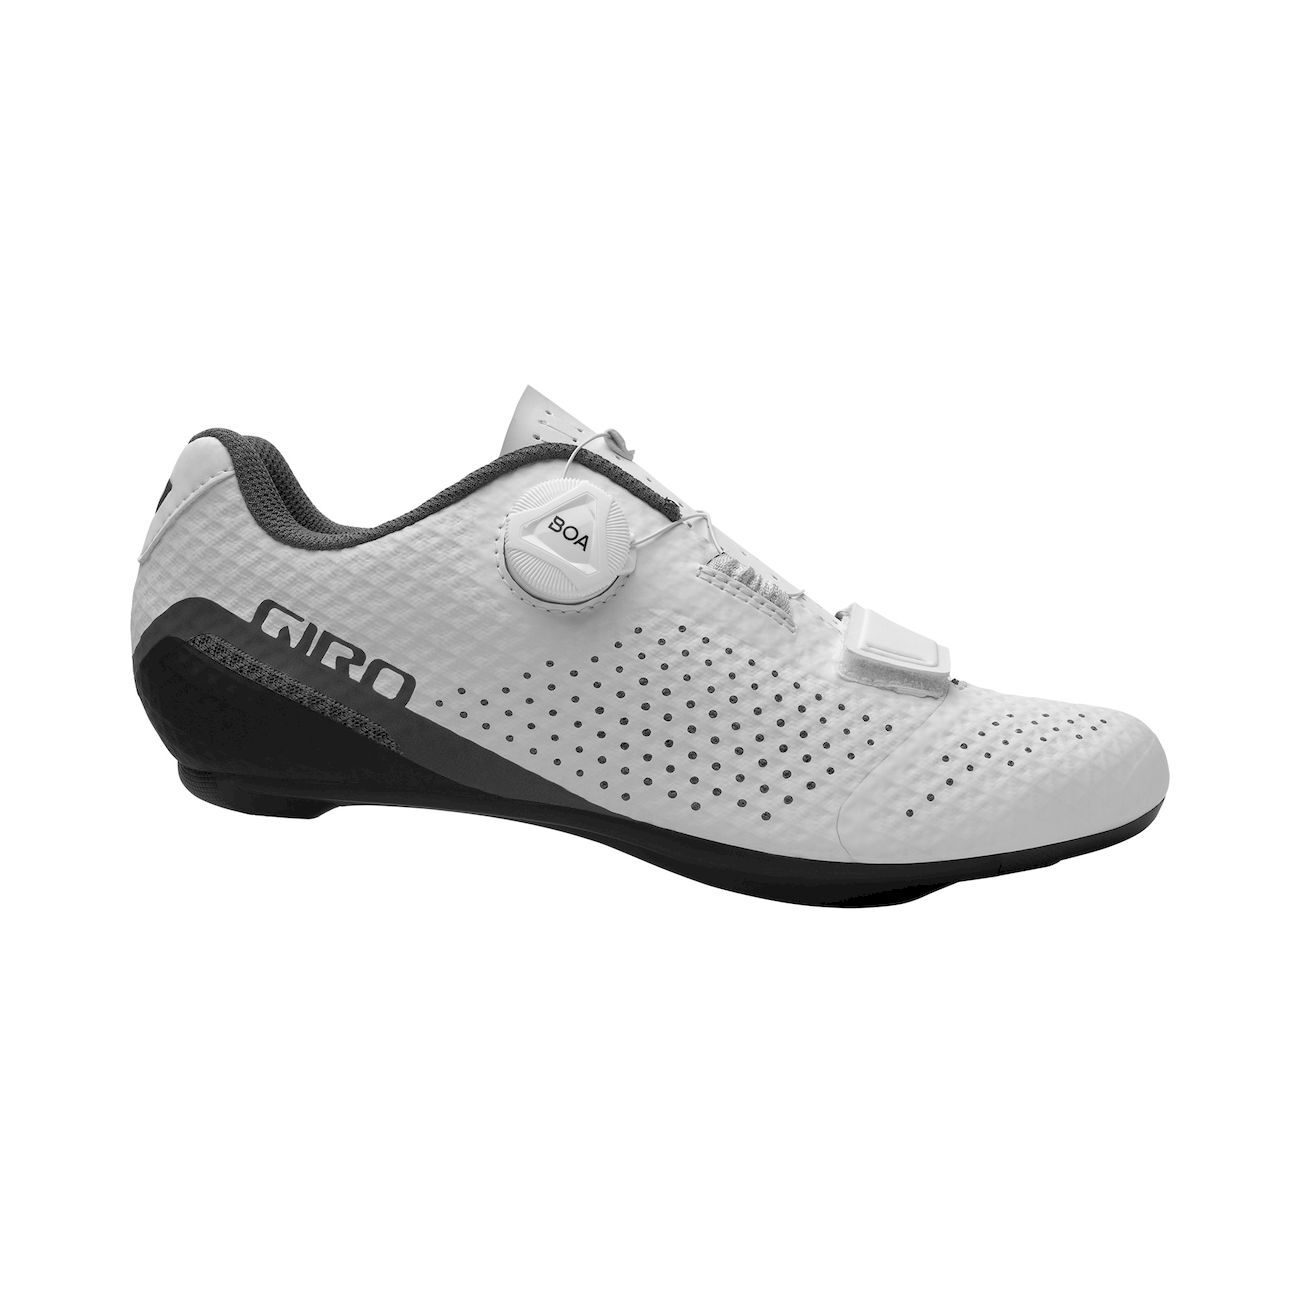 Giro Cadet - Zapatillas de ciclismo - Mujer